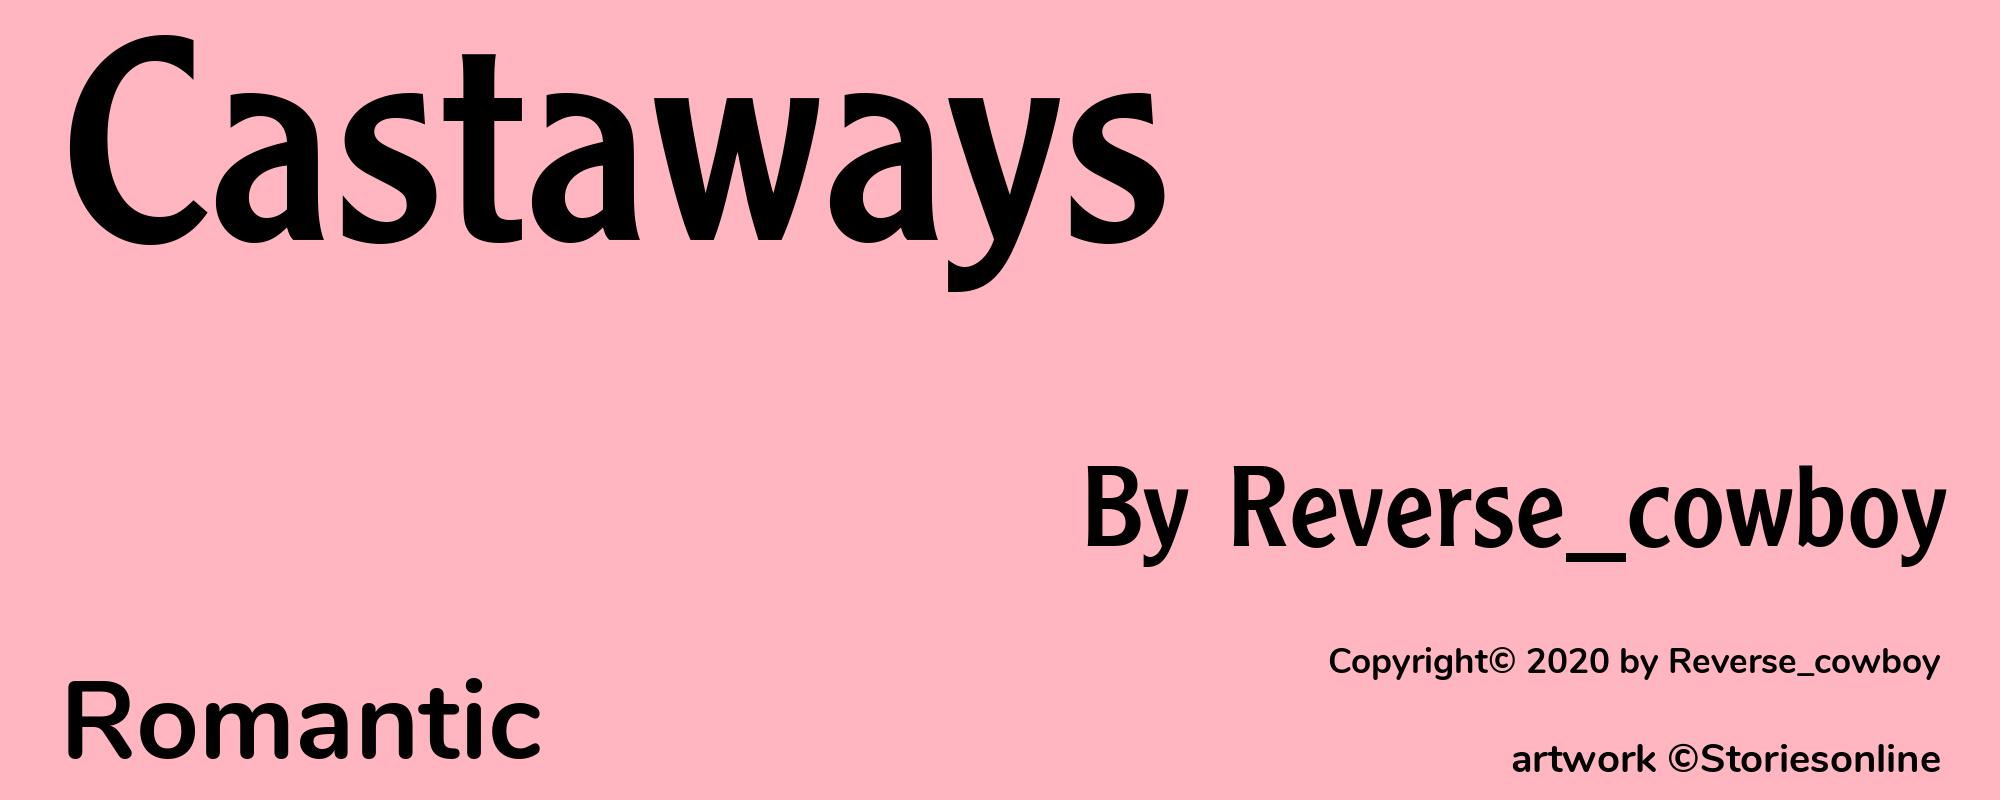 Castaways - Cover